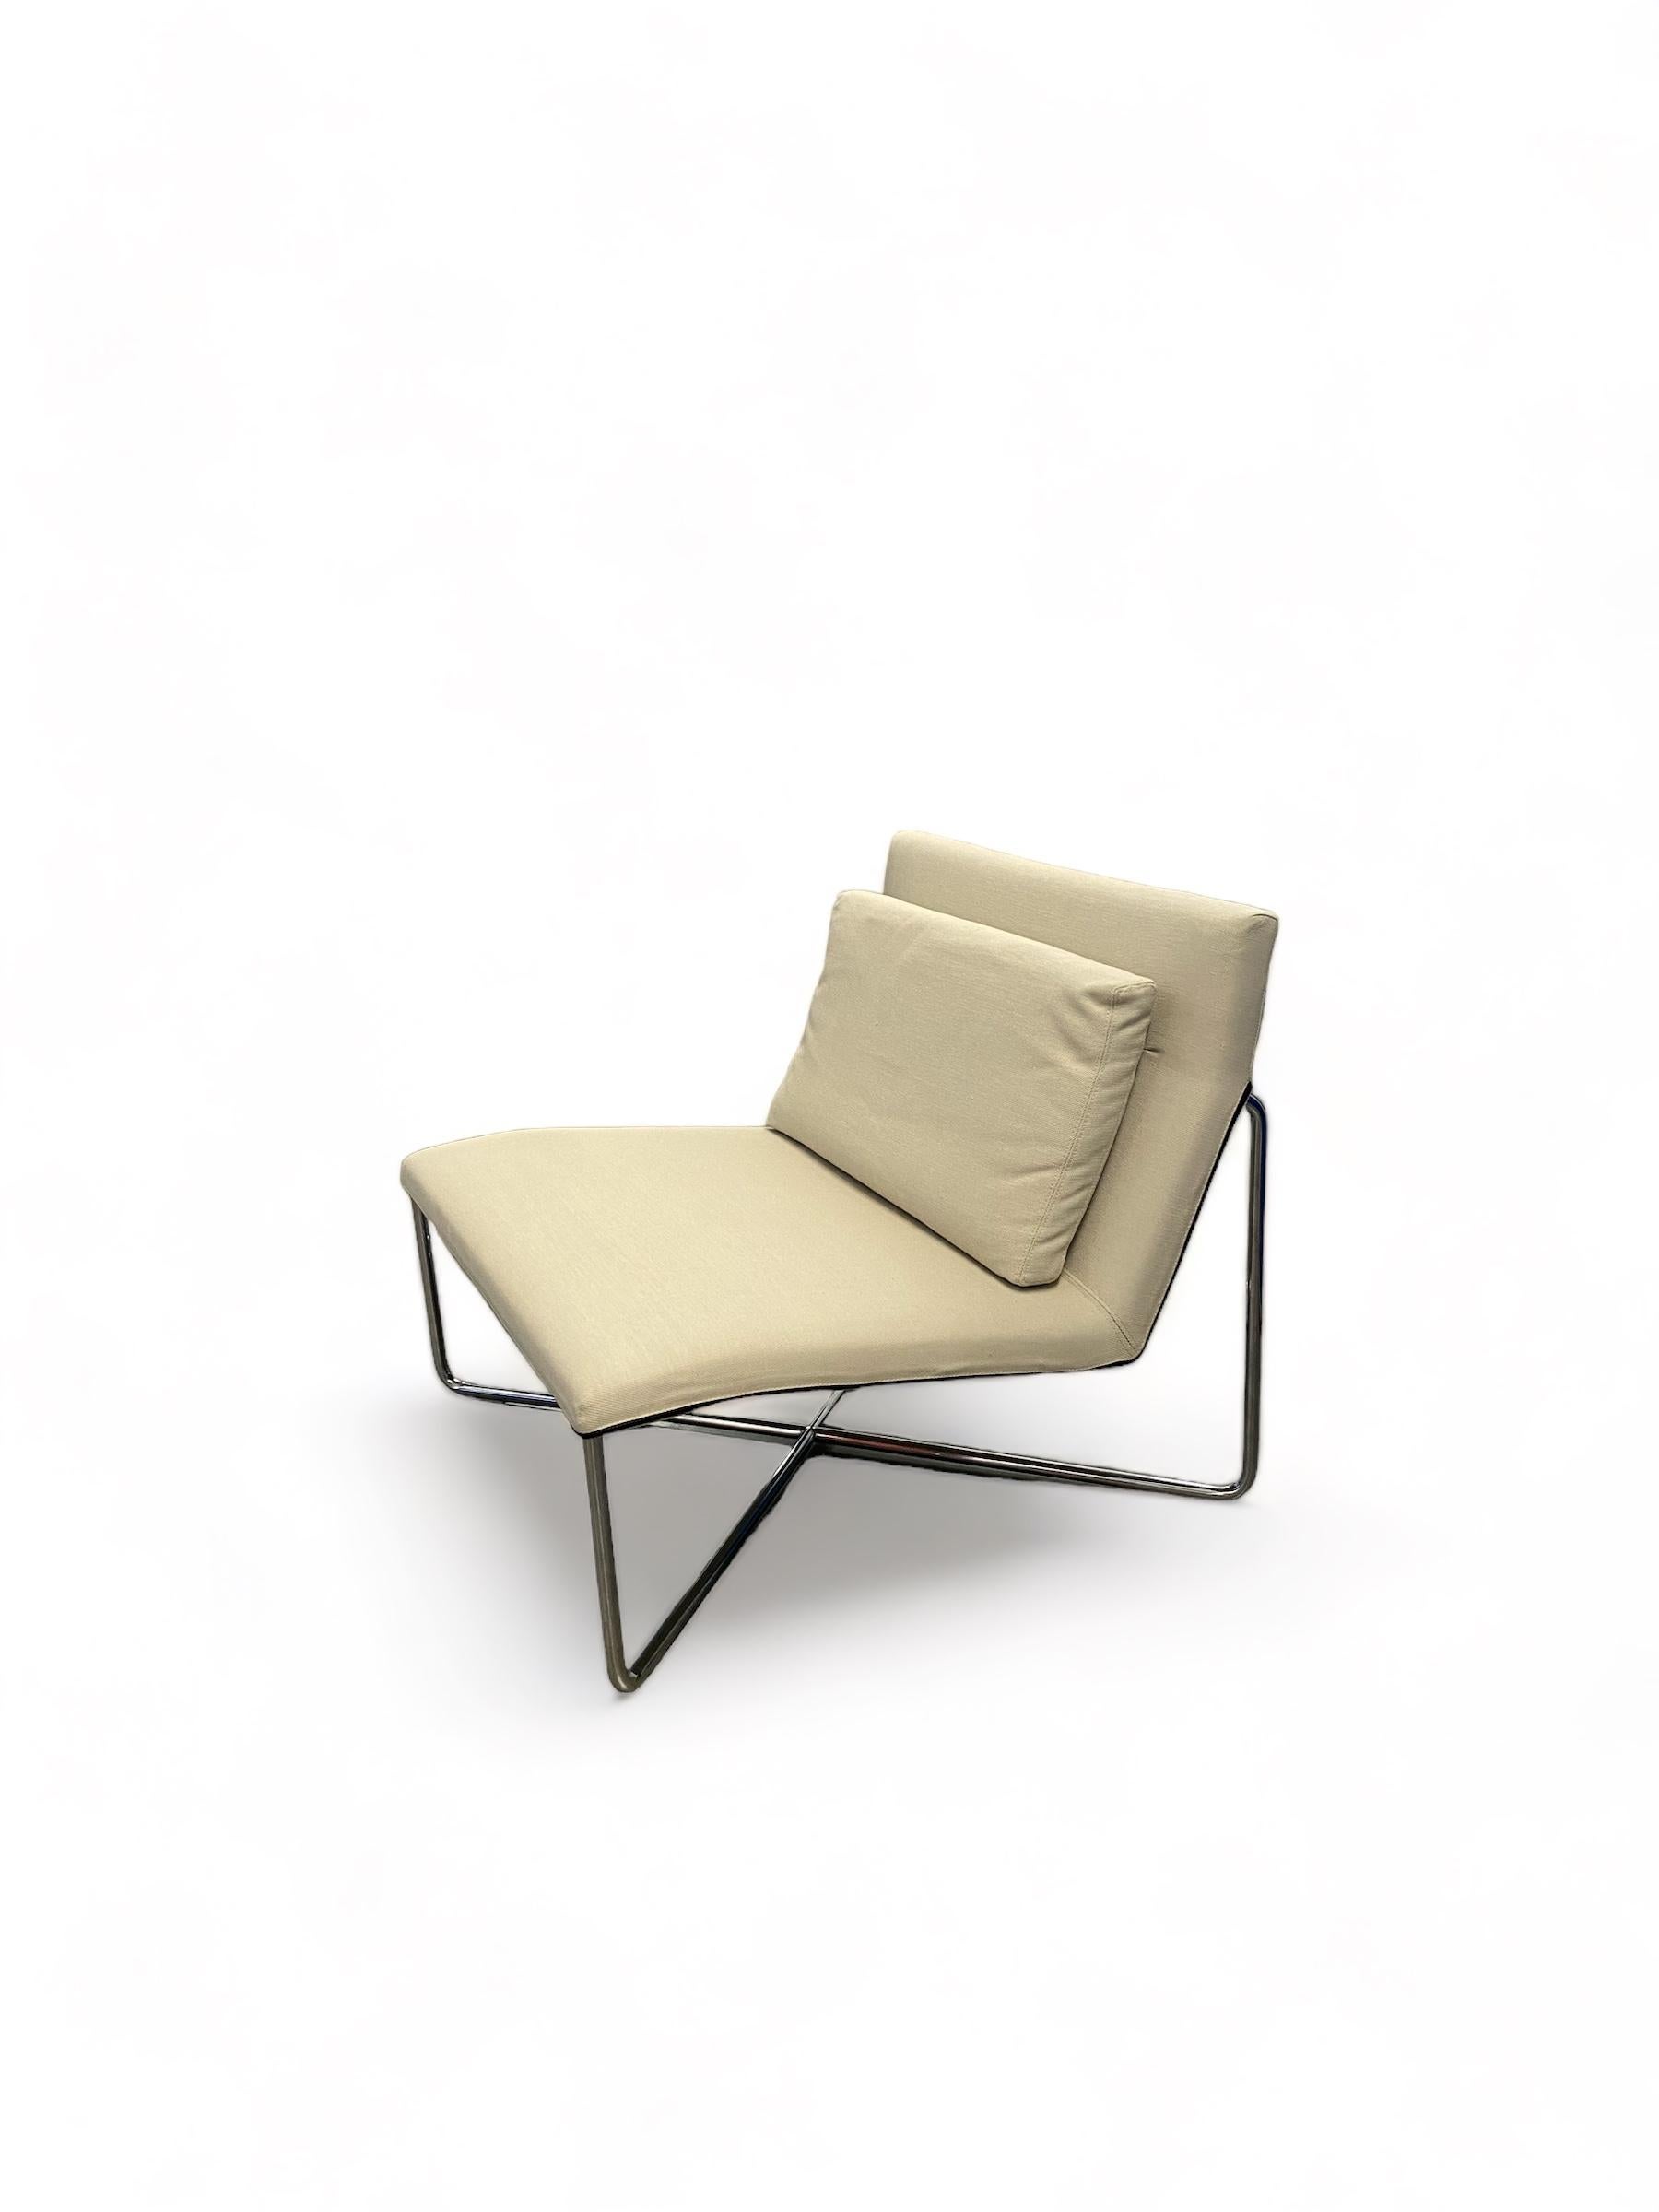 Modern White Diller chair designed by Rodolfo Dordoni for Minotti, Italy.